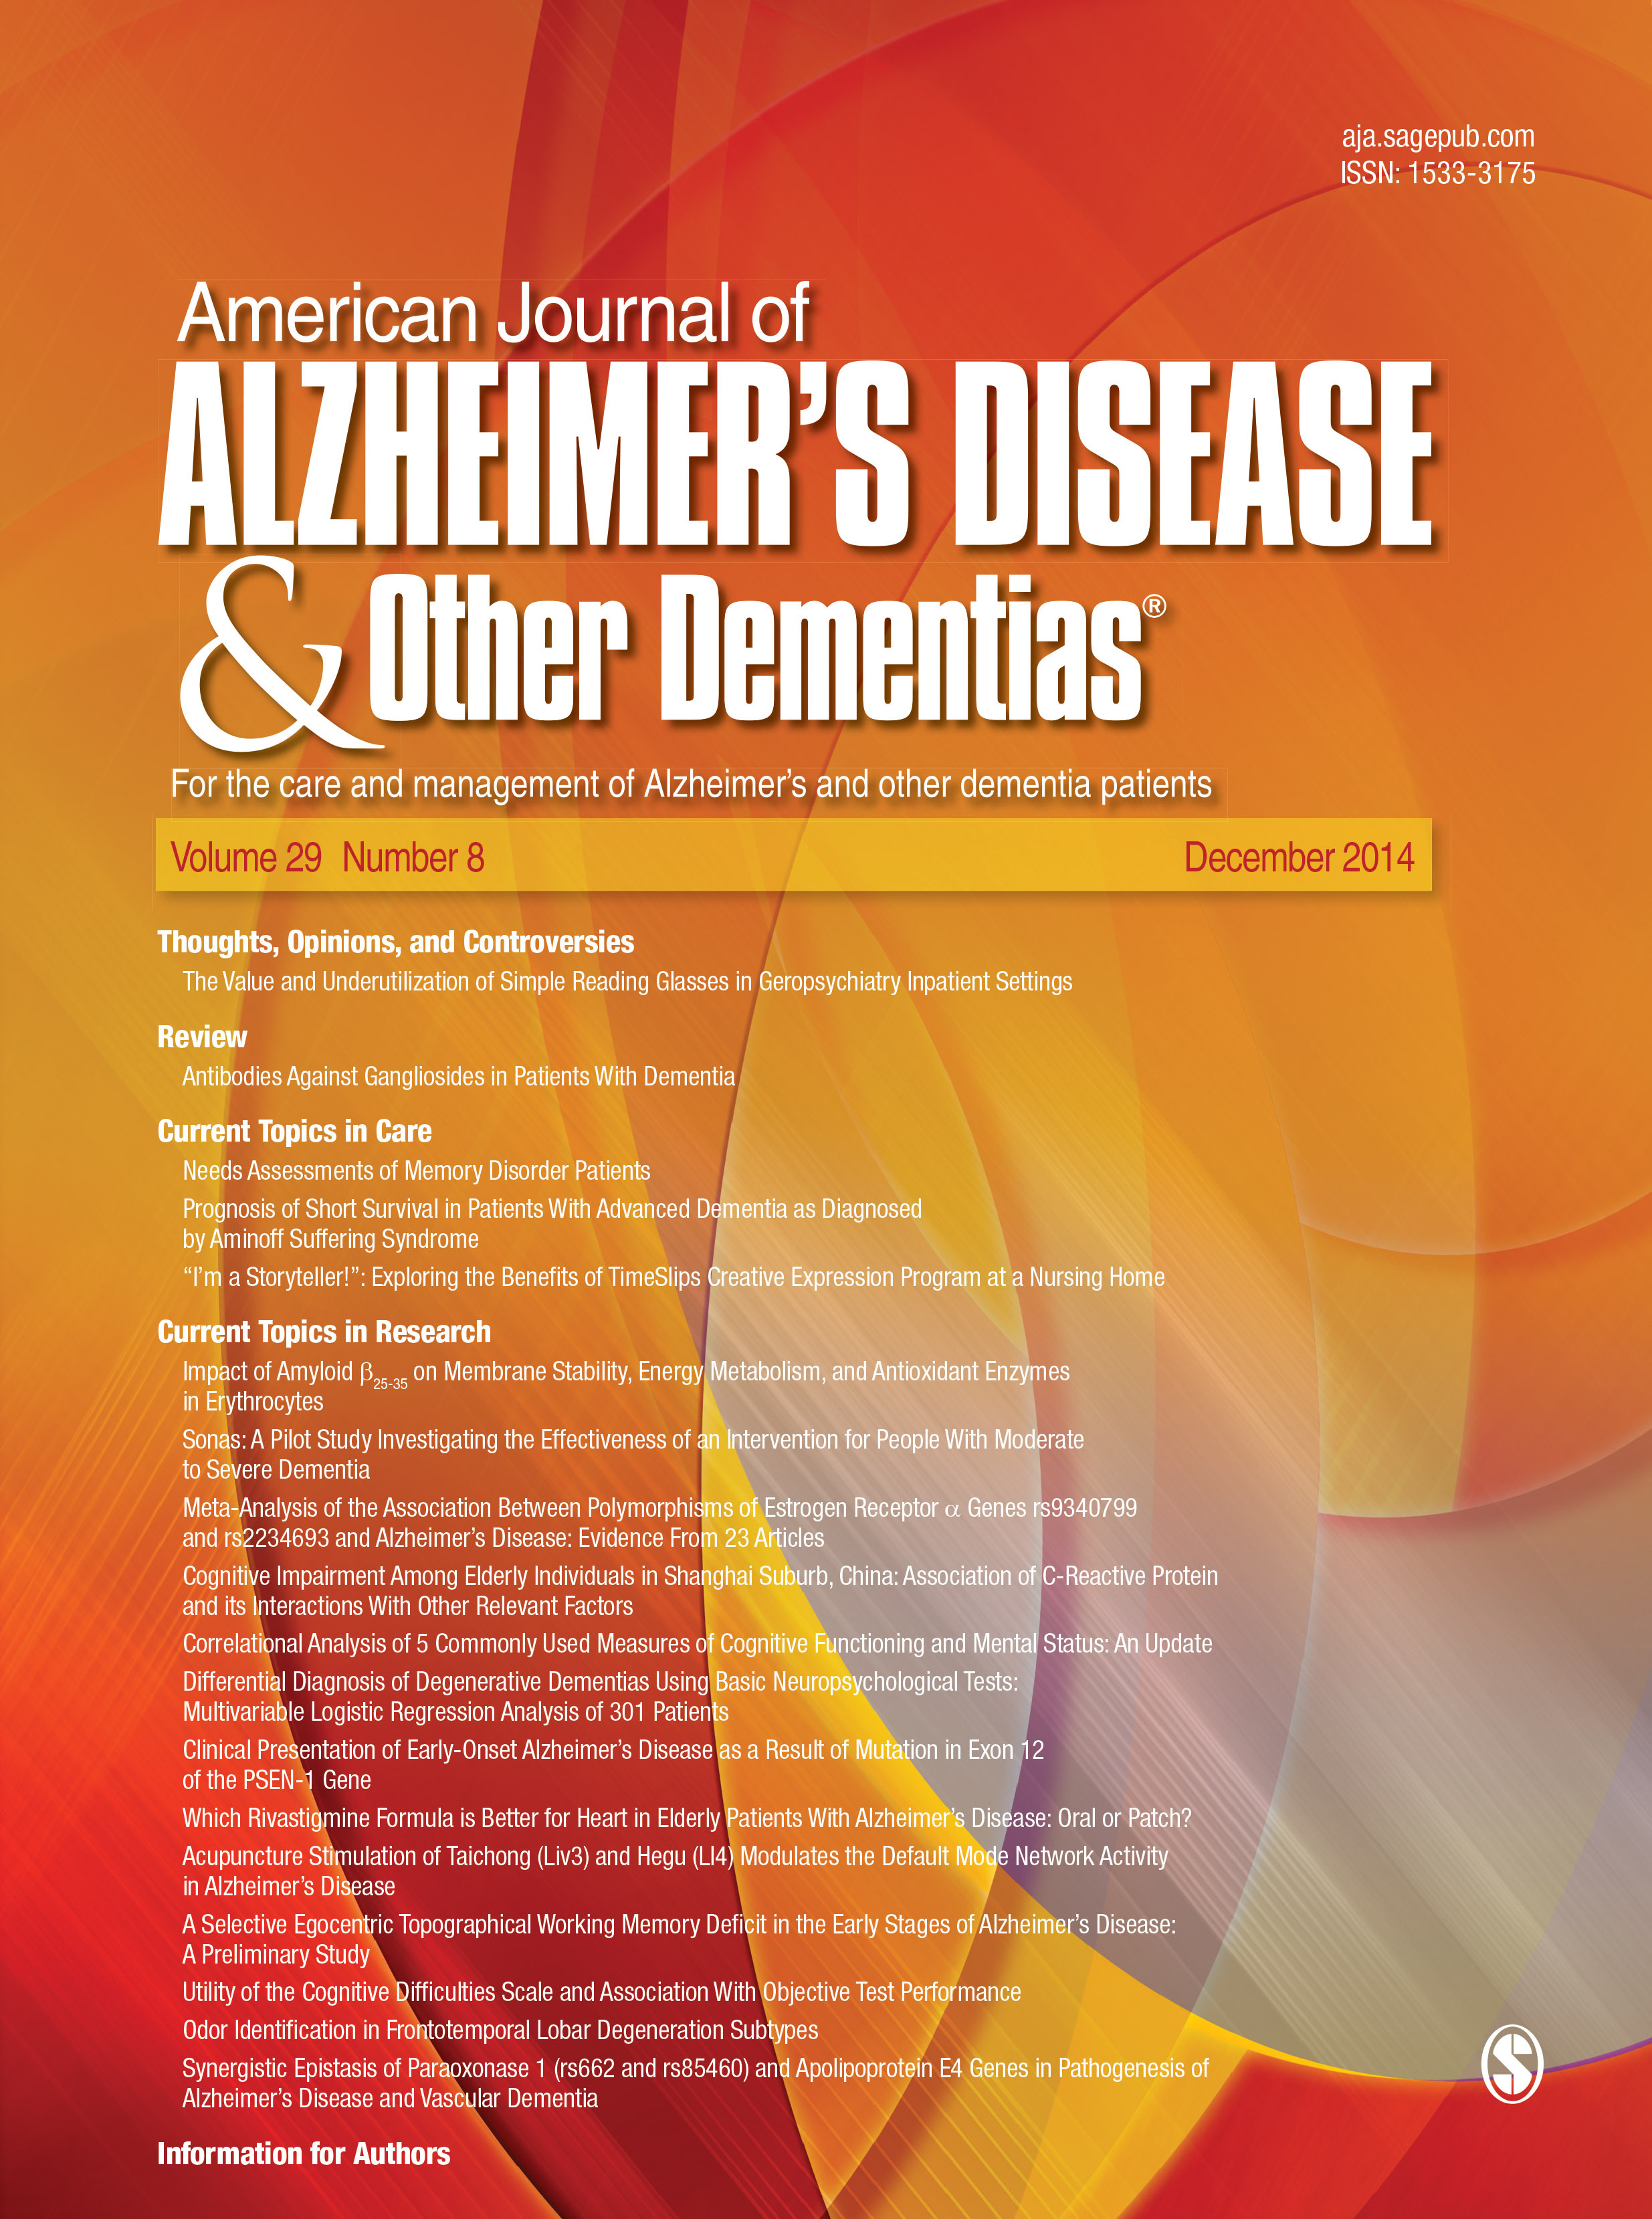 American Journal of Alzheimer's Disease & Other Dementias